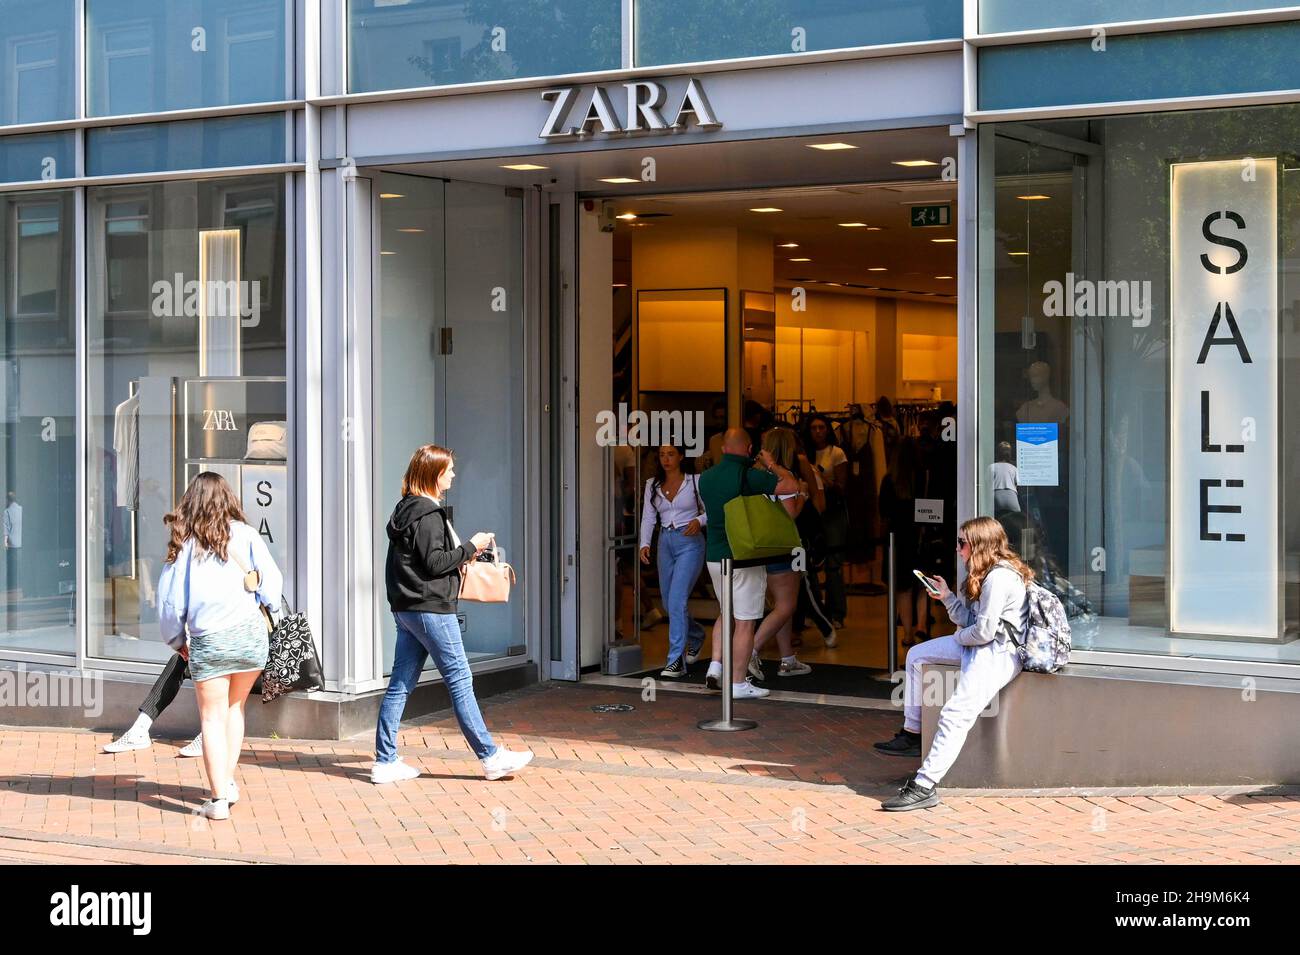 Zara shop england hi-res stock photography and images - Alamy